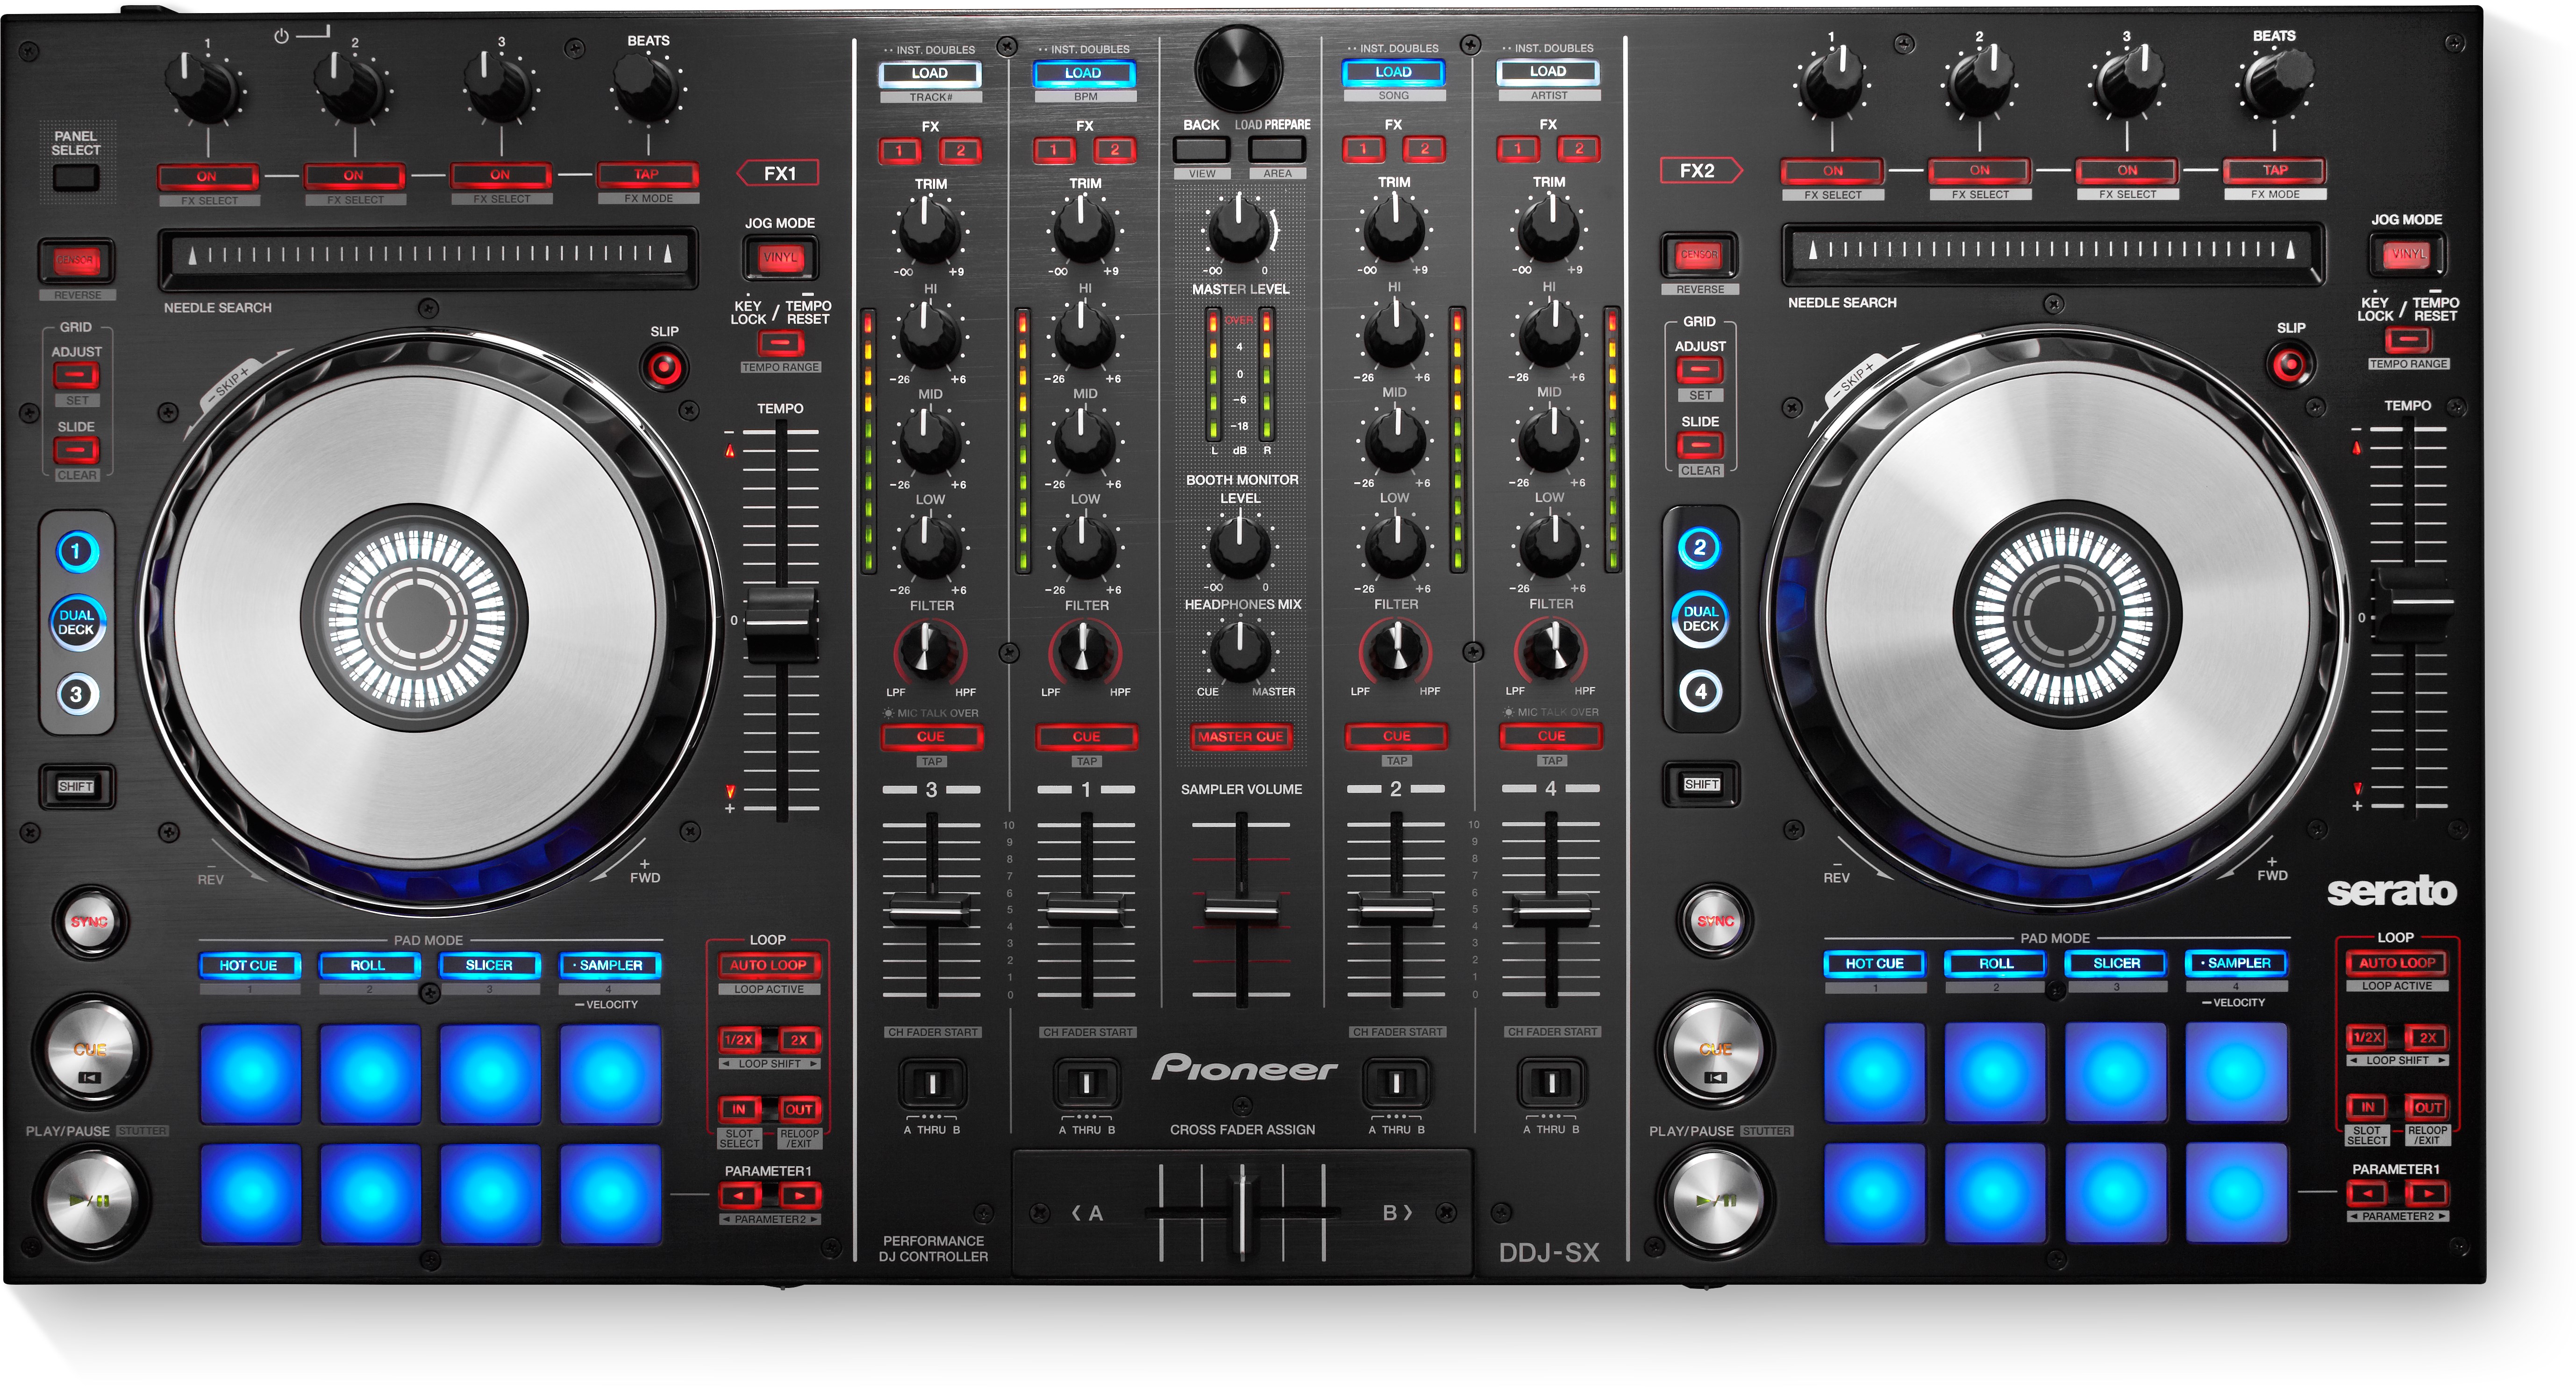 Pioneer Pro DJ DJ DDJ-SX3 Performance 4 channel controller